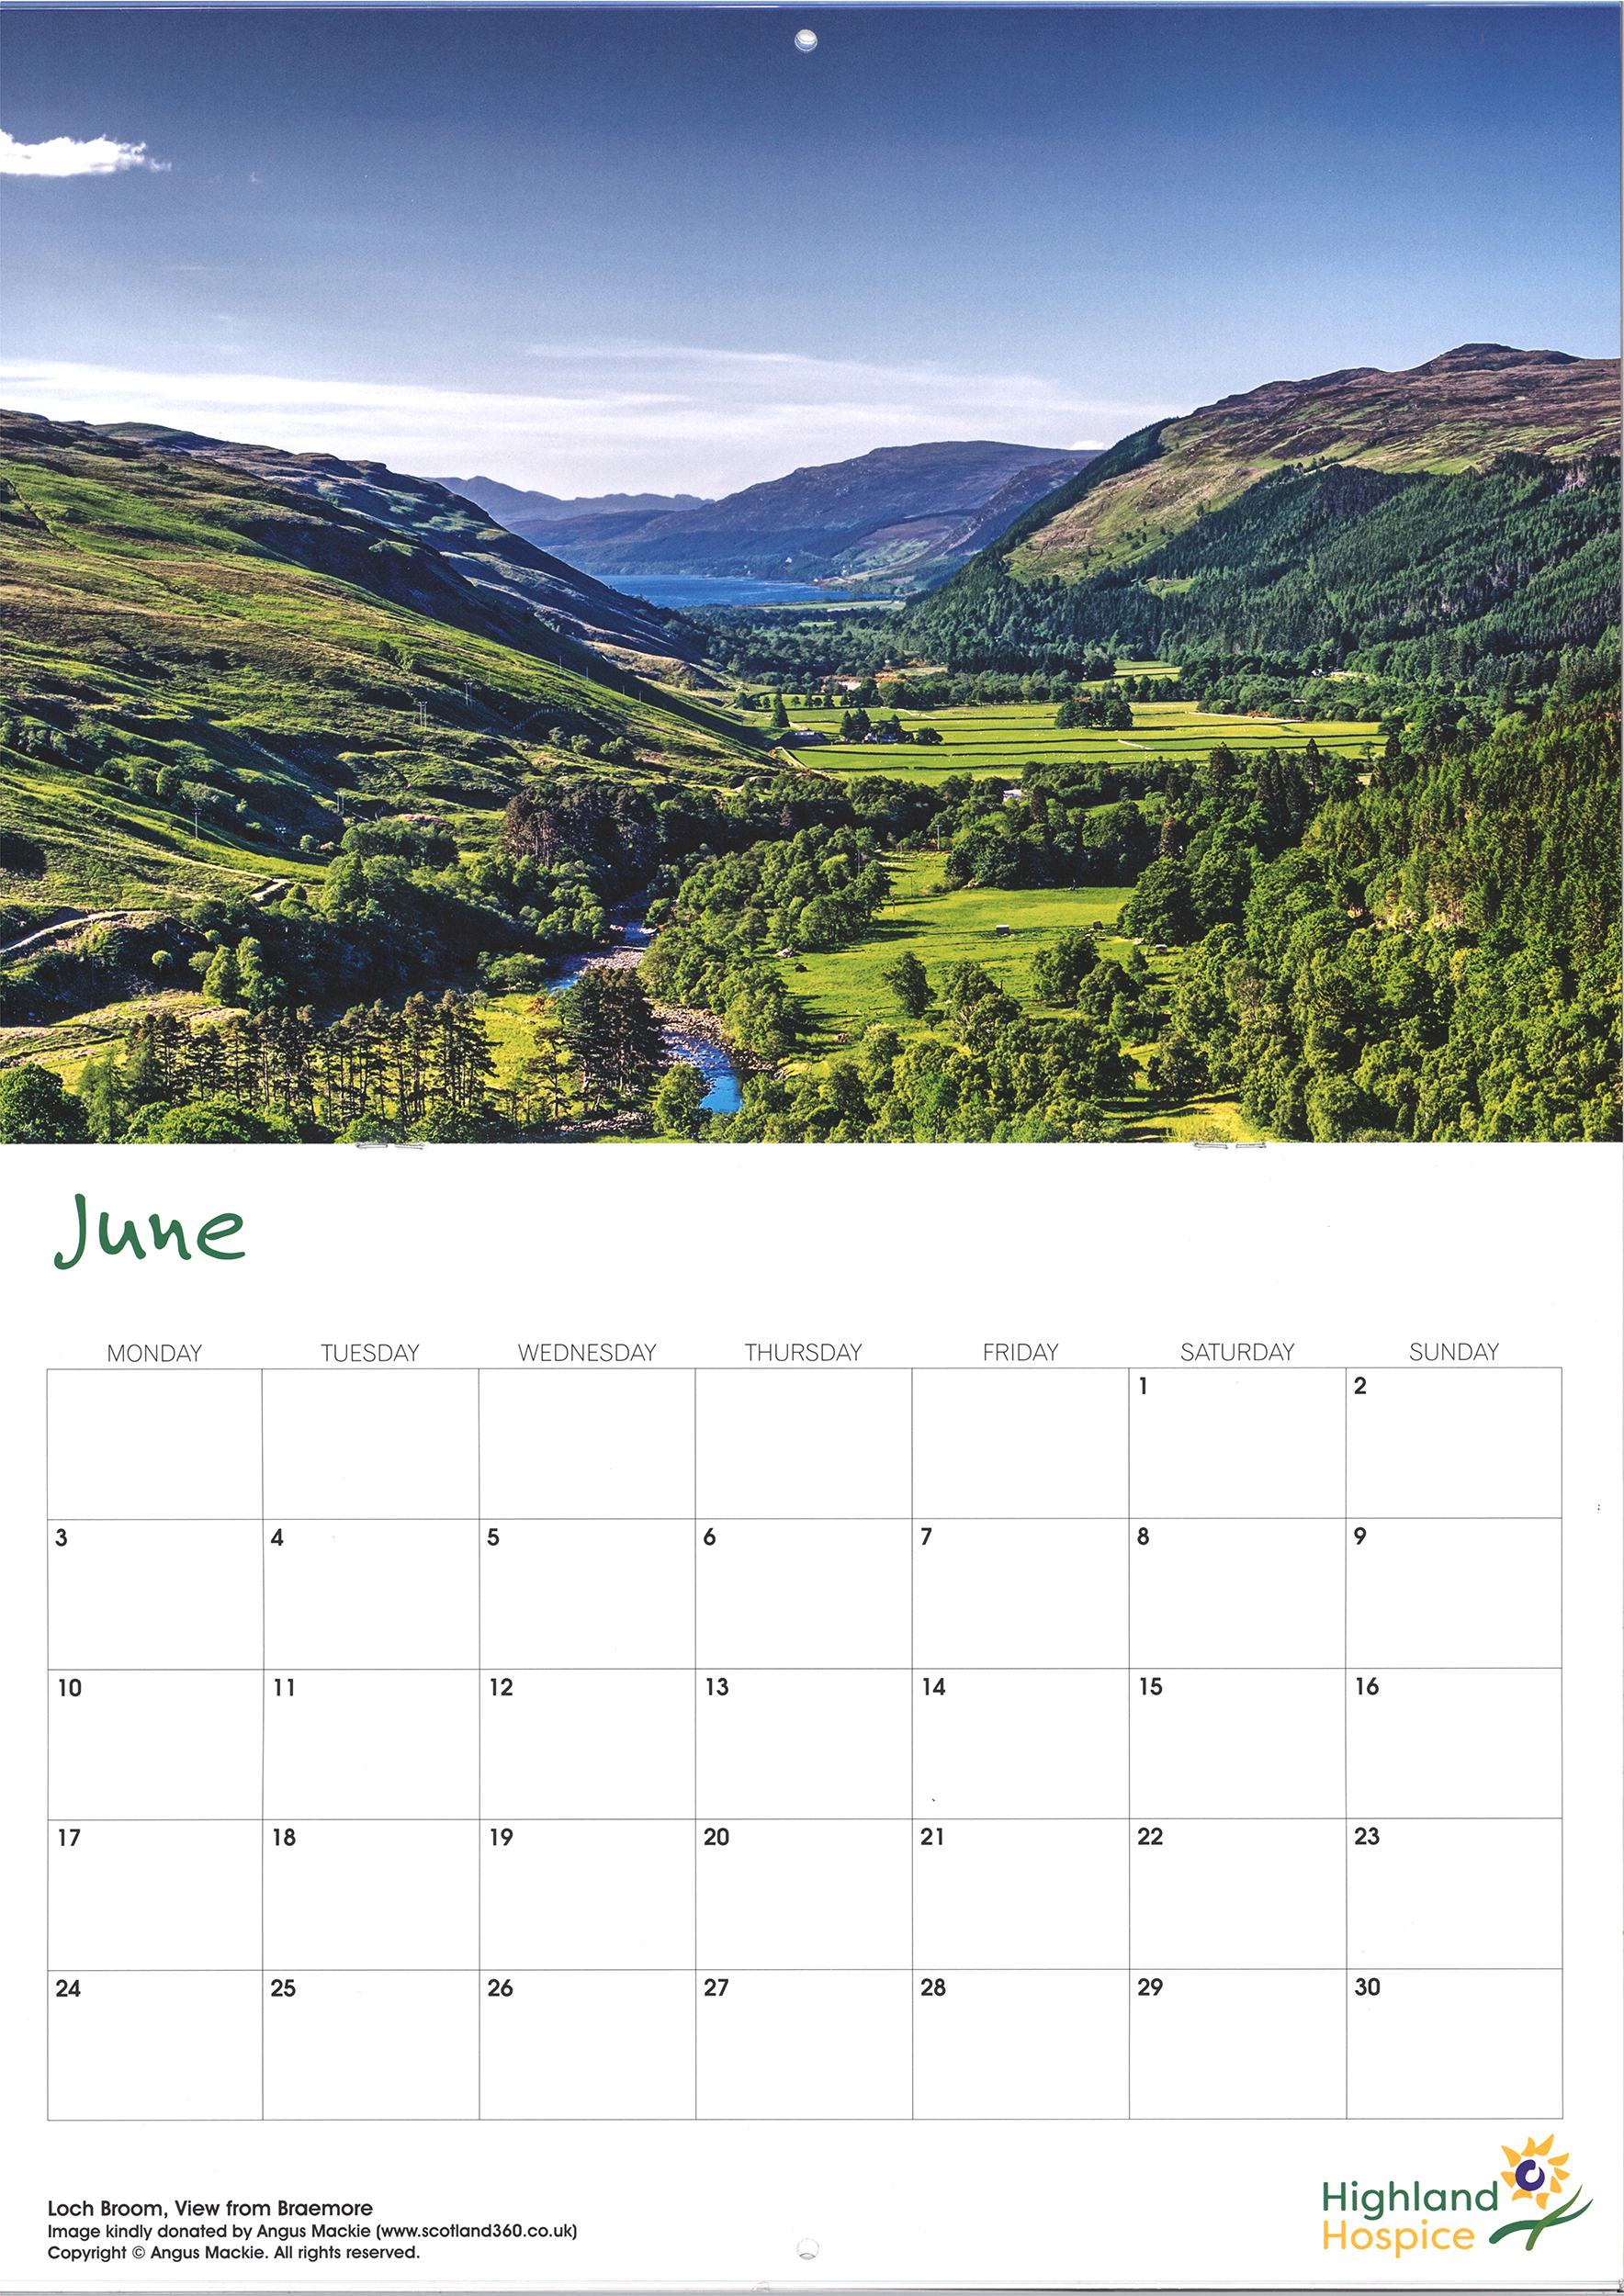 Highland Hospice 2019 Calendar _Front Page